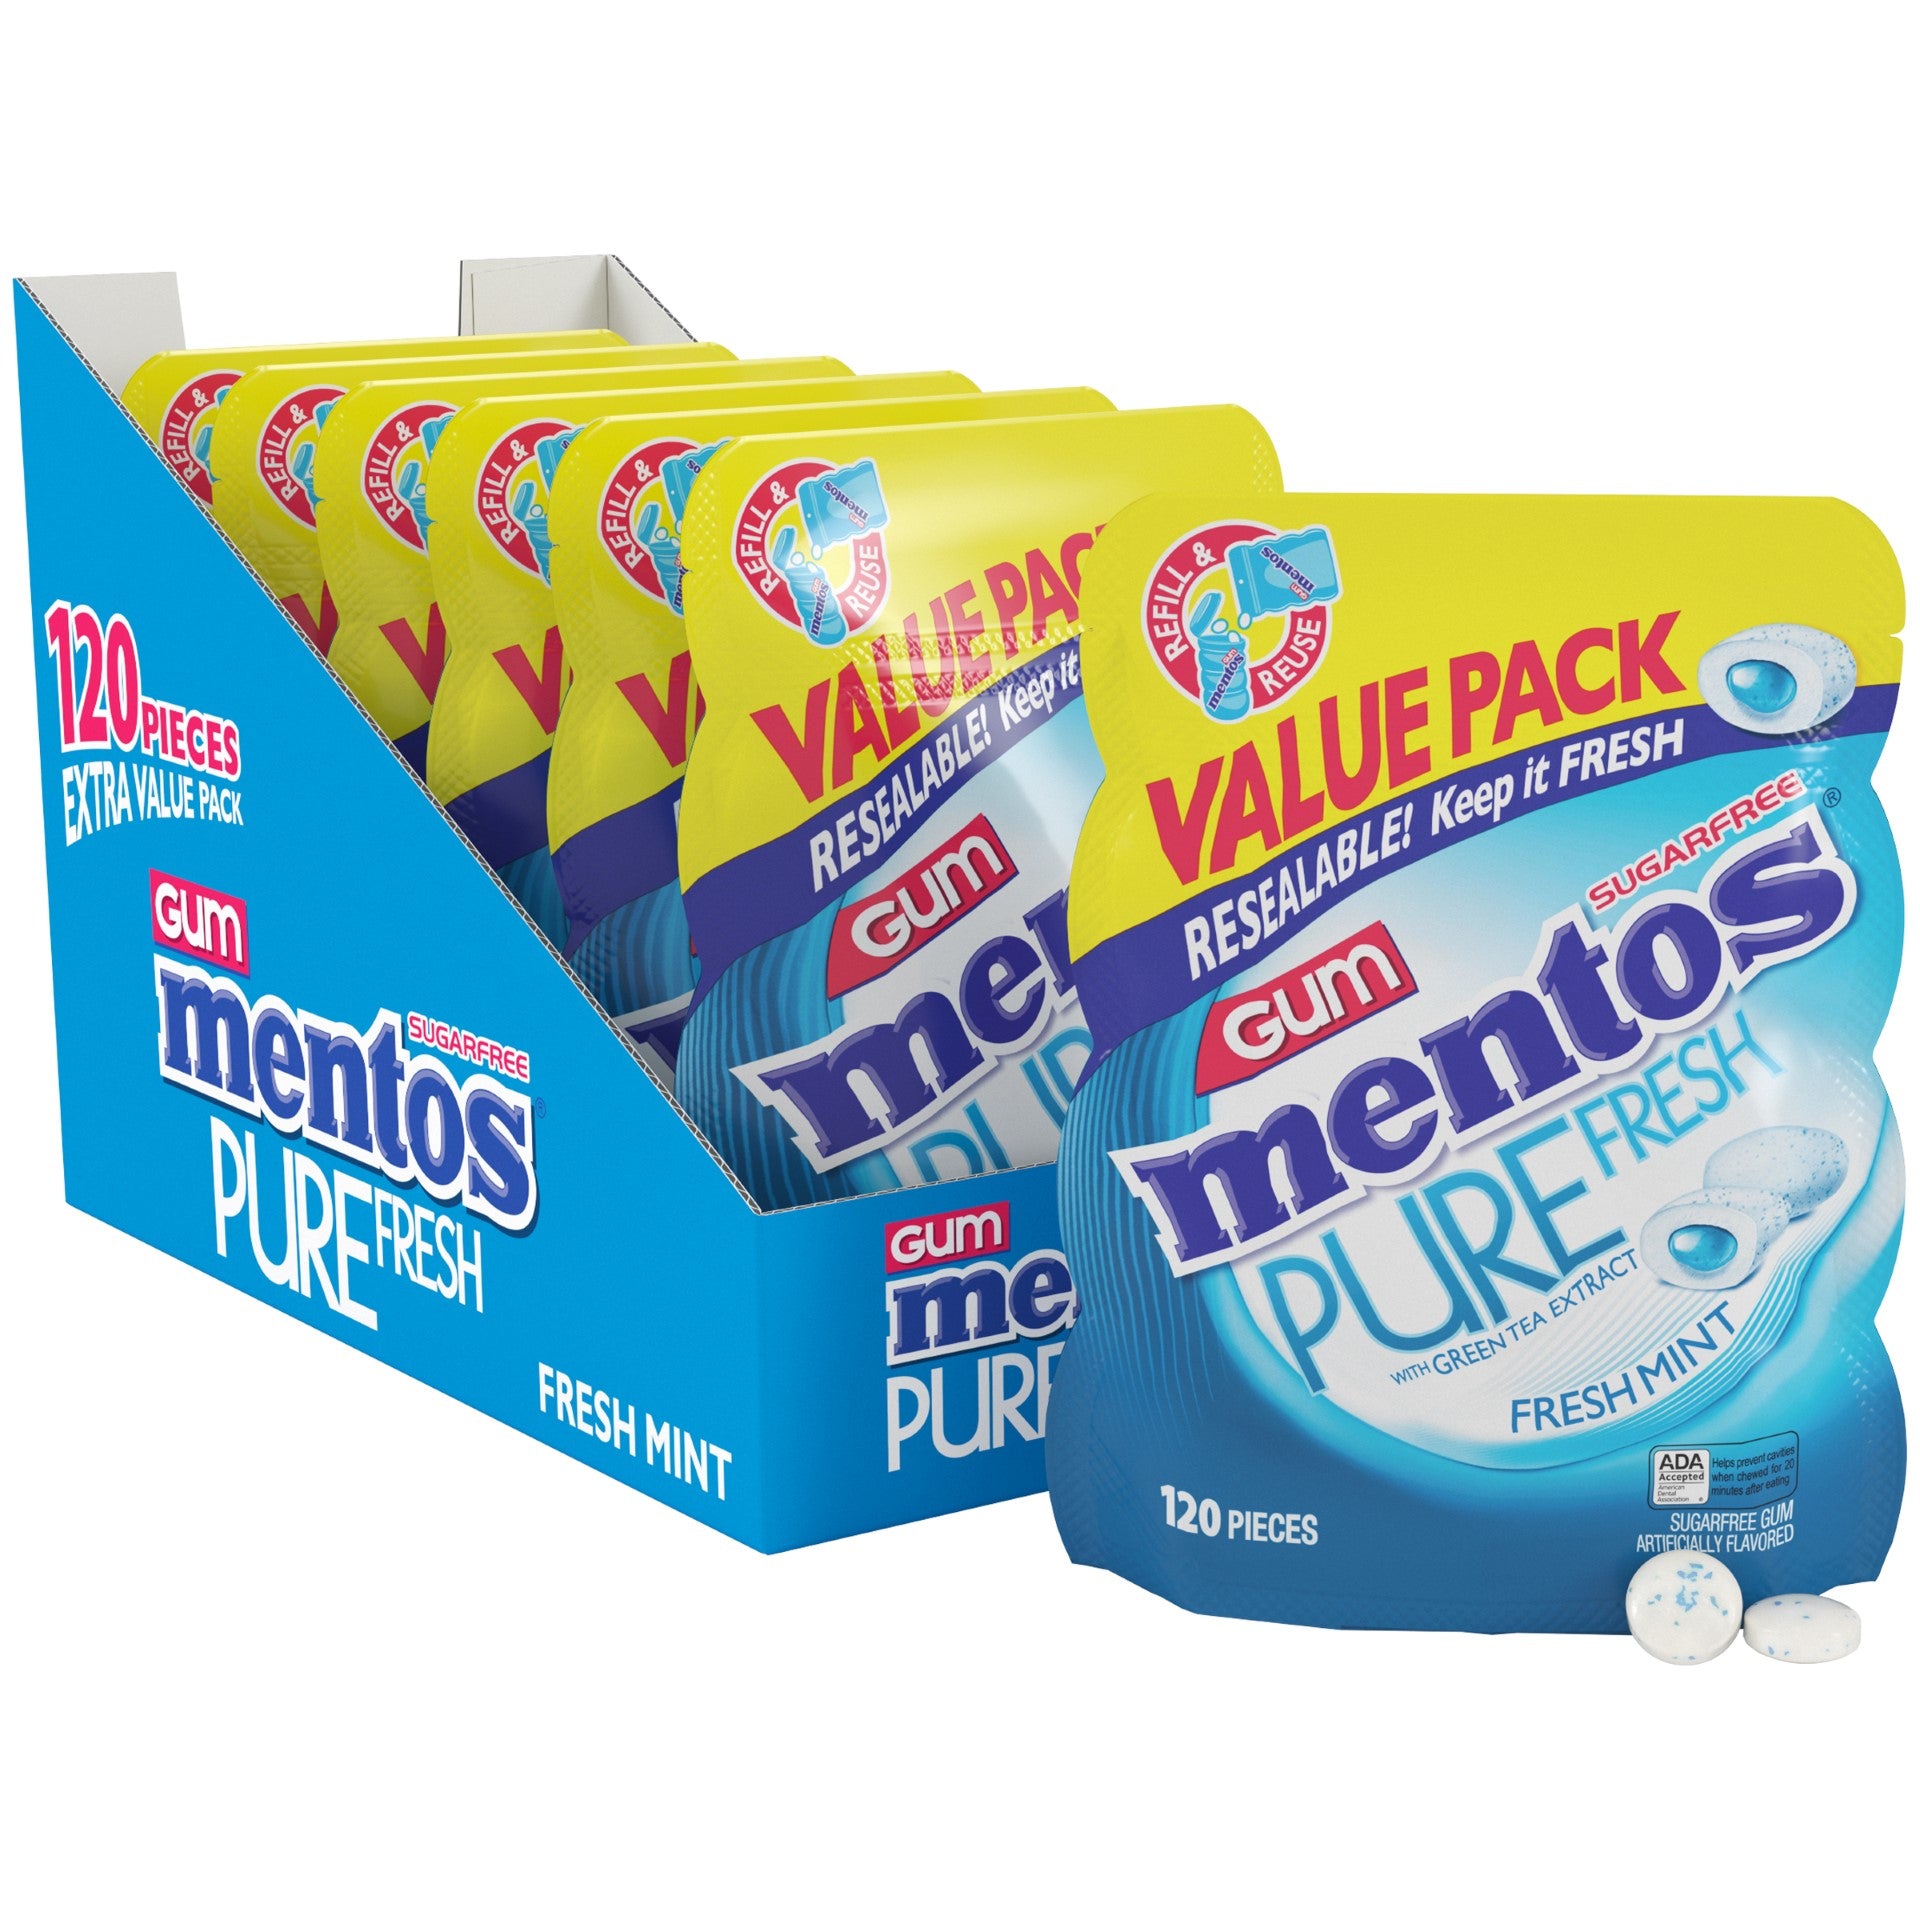 Twinings Pure White Tea 20 Ct Box - 6ct Case